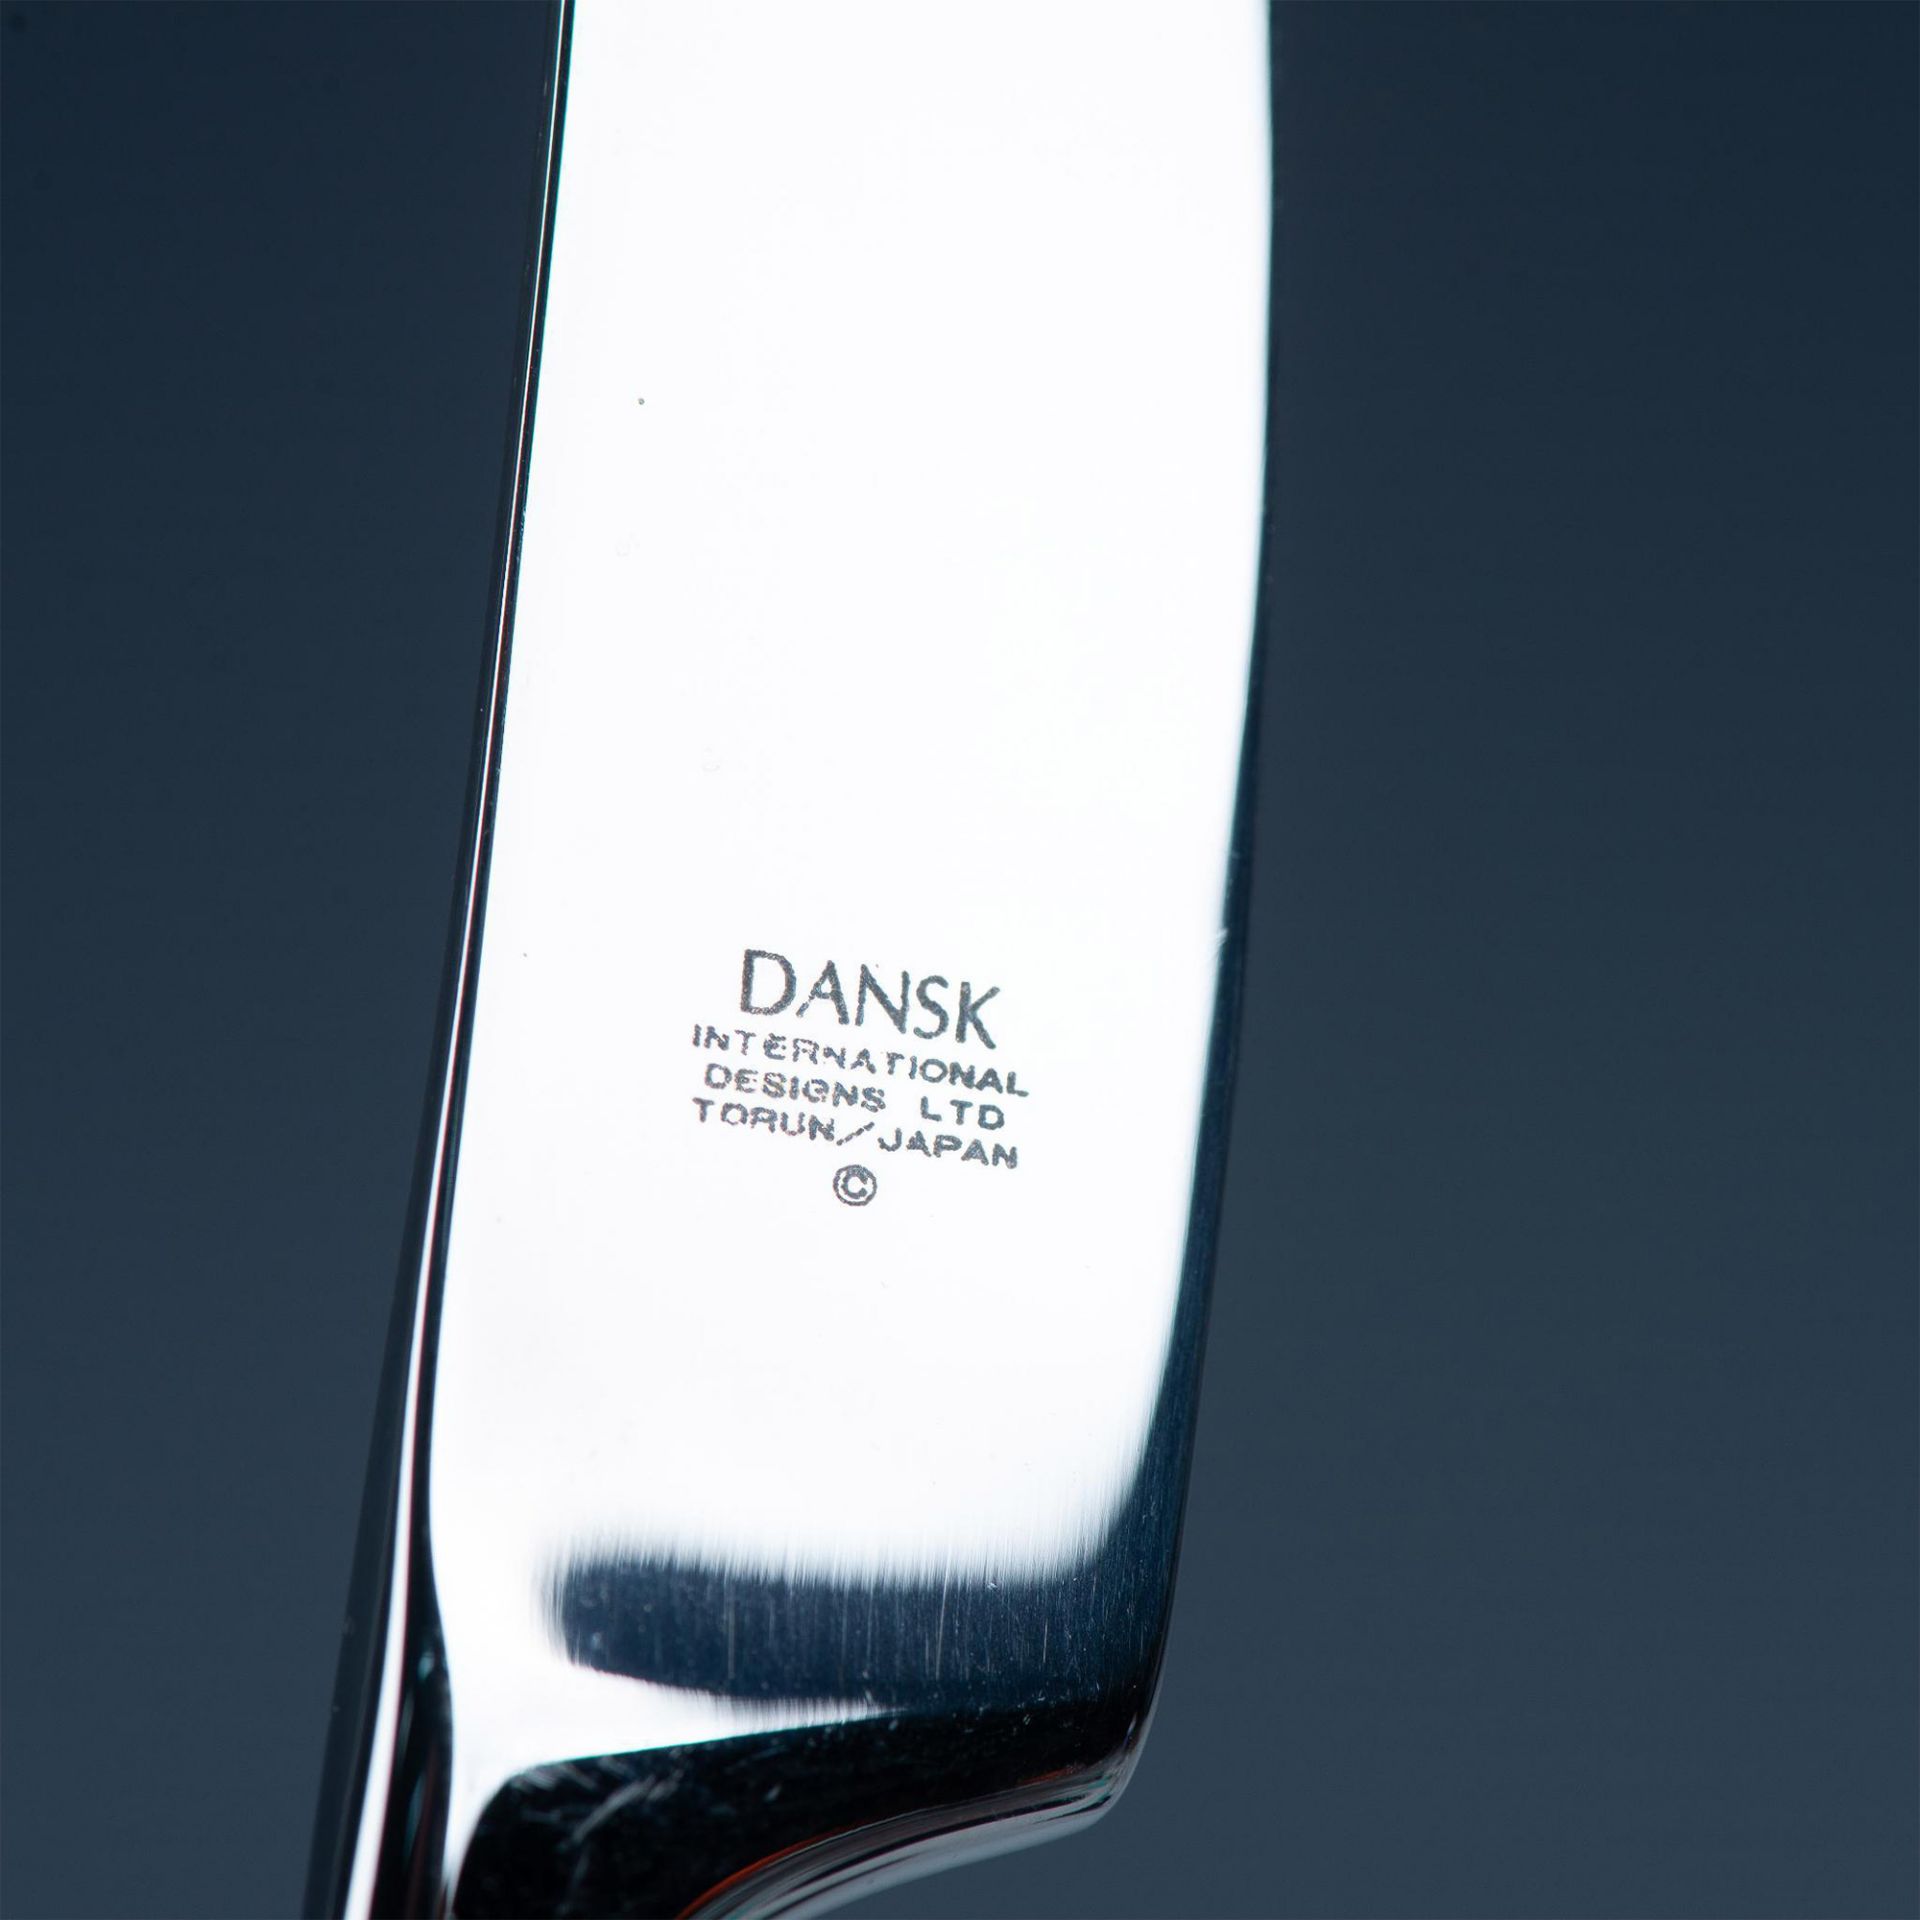 48pc Dansk Stainless Flatware-Service for 8, Torun - Image 10 of 10